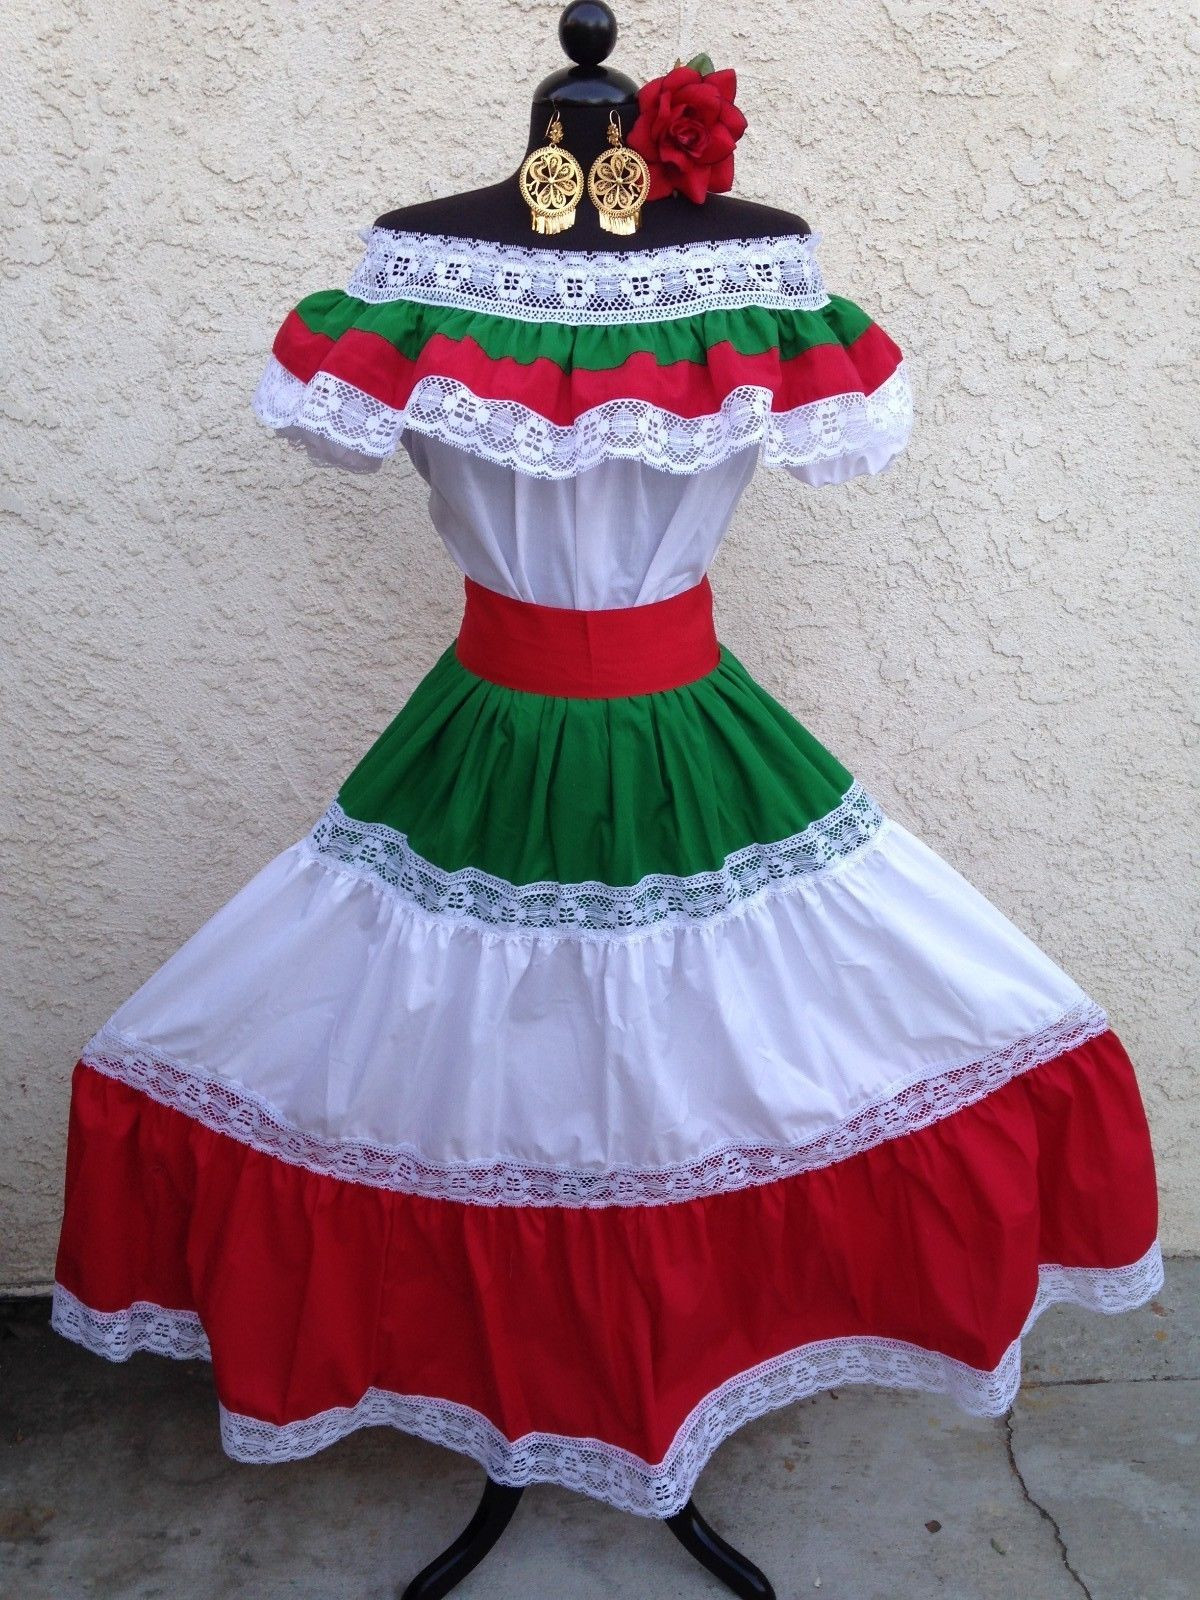 Cinco De Mayo Dresses Ideas
 Details about MEXICAN FIESTA CINCO DE MAYO WEDDING DRESS